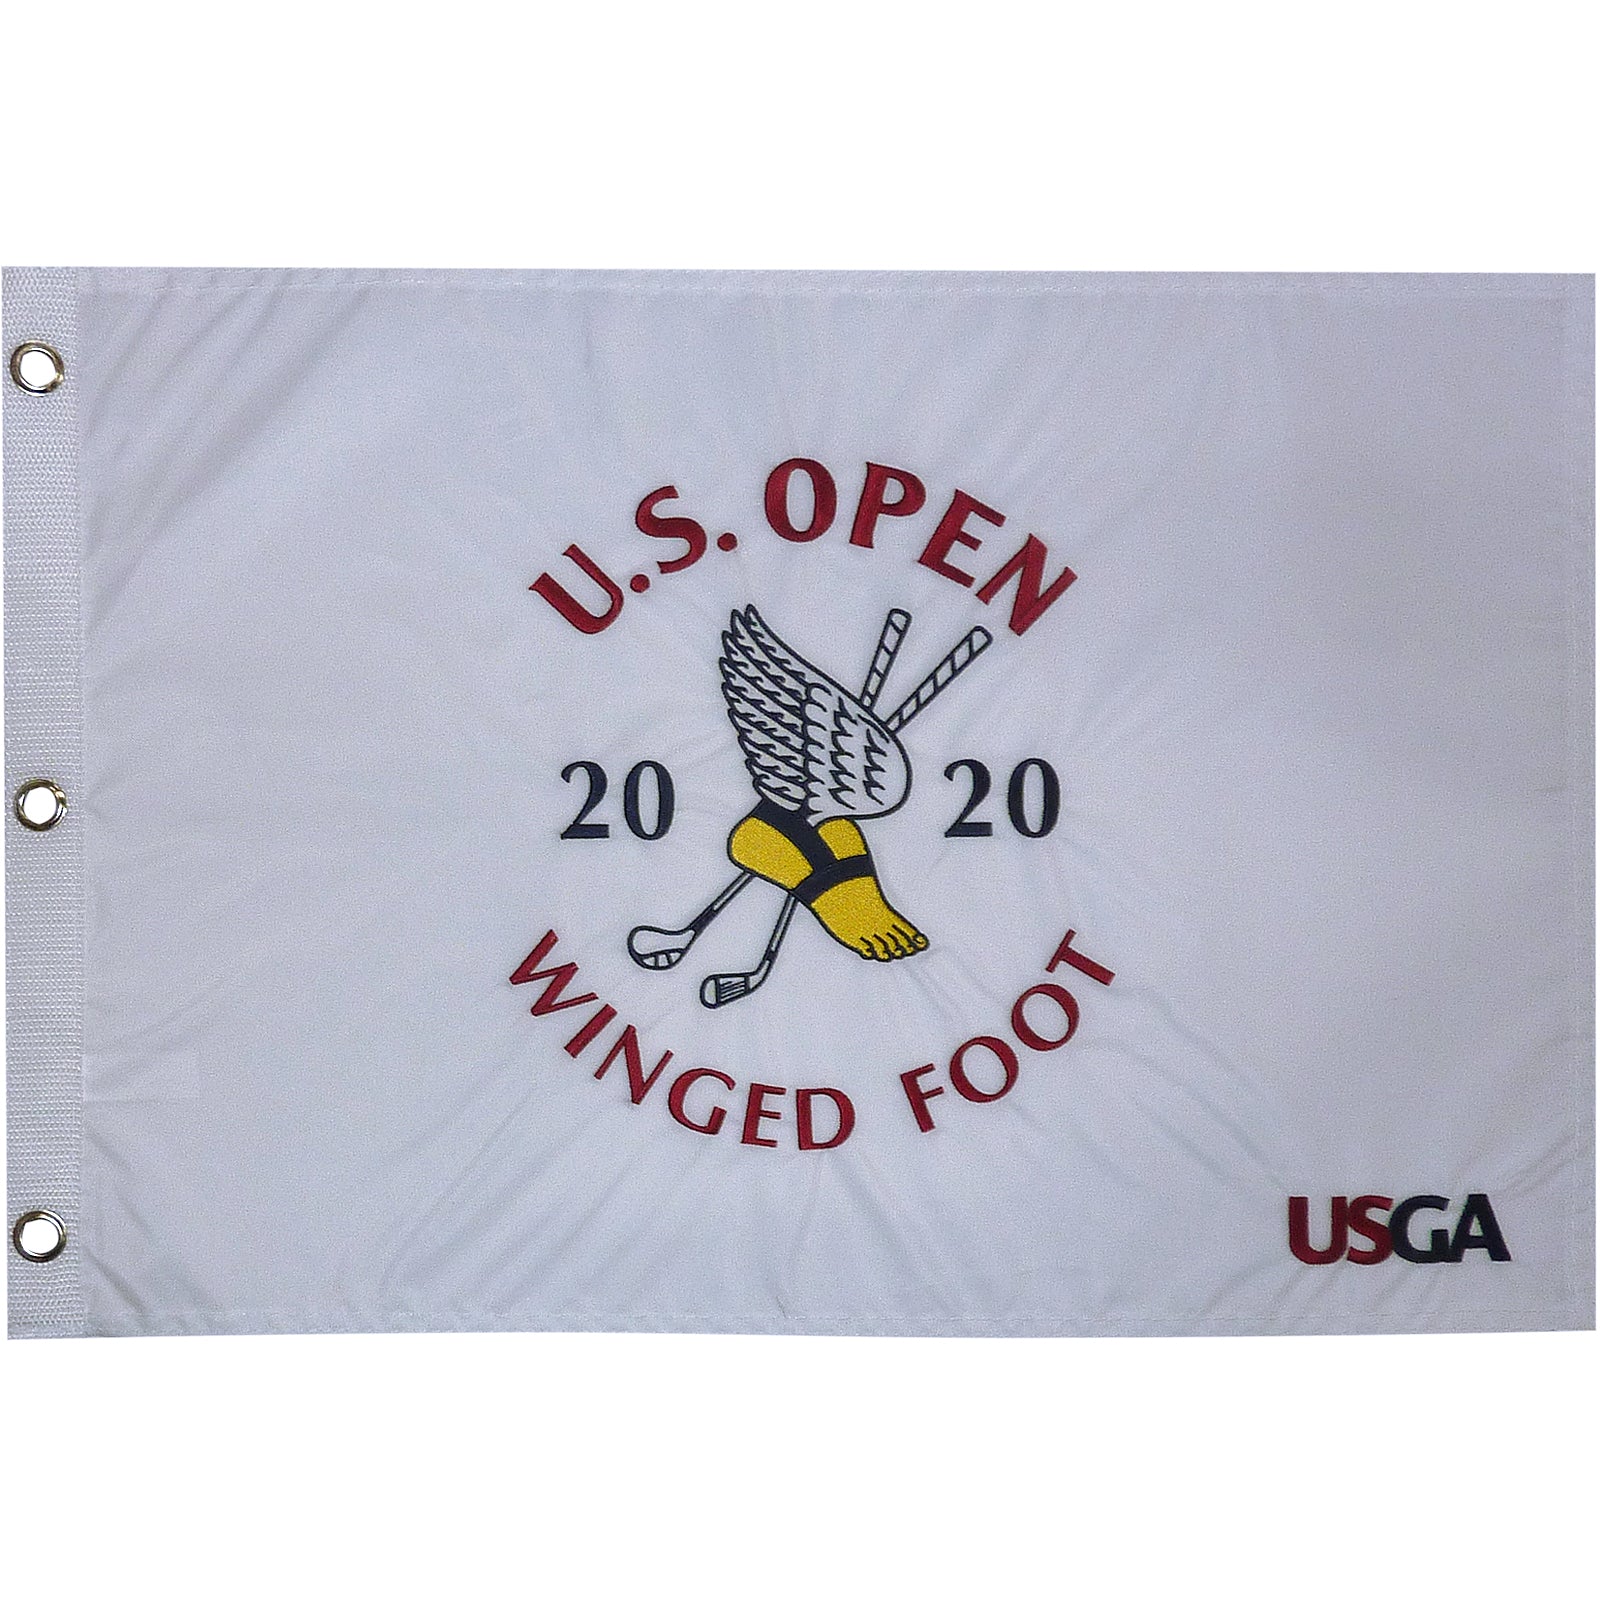 2020 U.S. Open (Winged Foot Embroidered) Golf Pin Flag - Bryson DeChambeau Champion